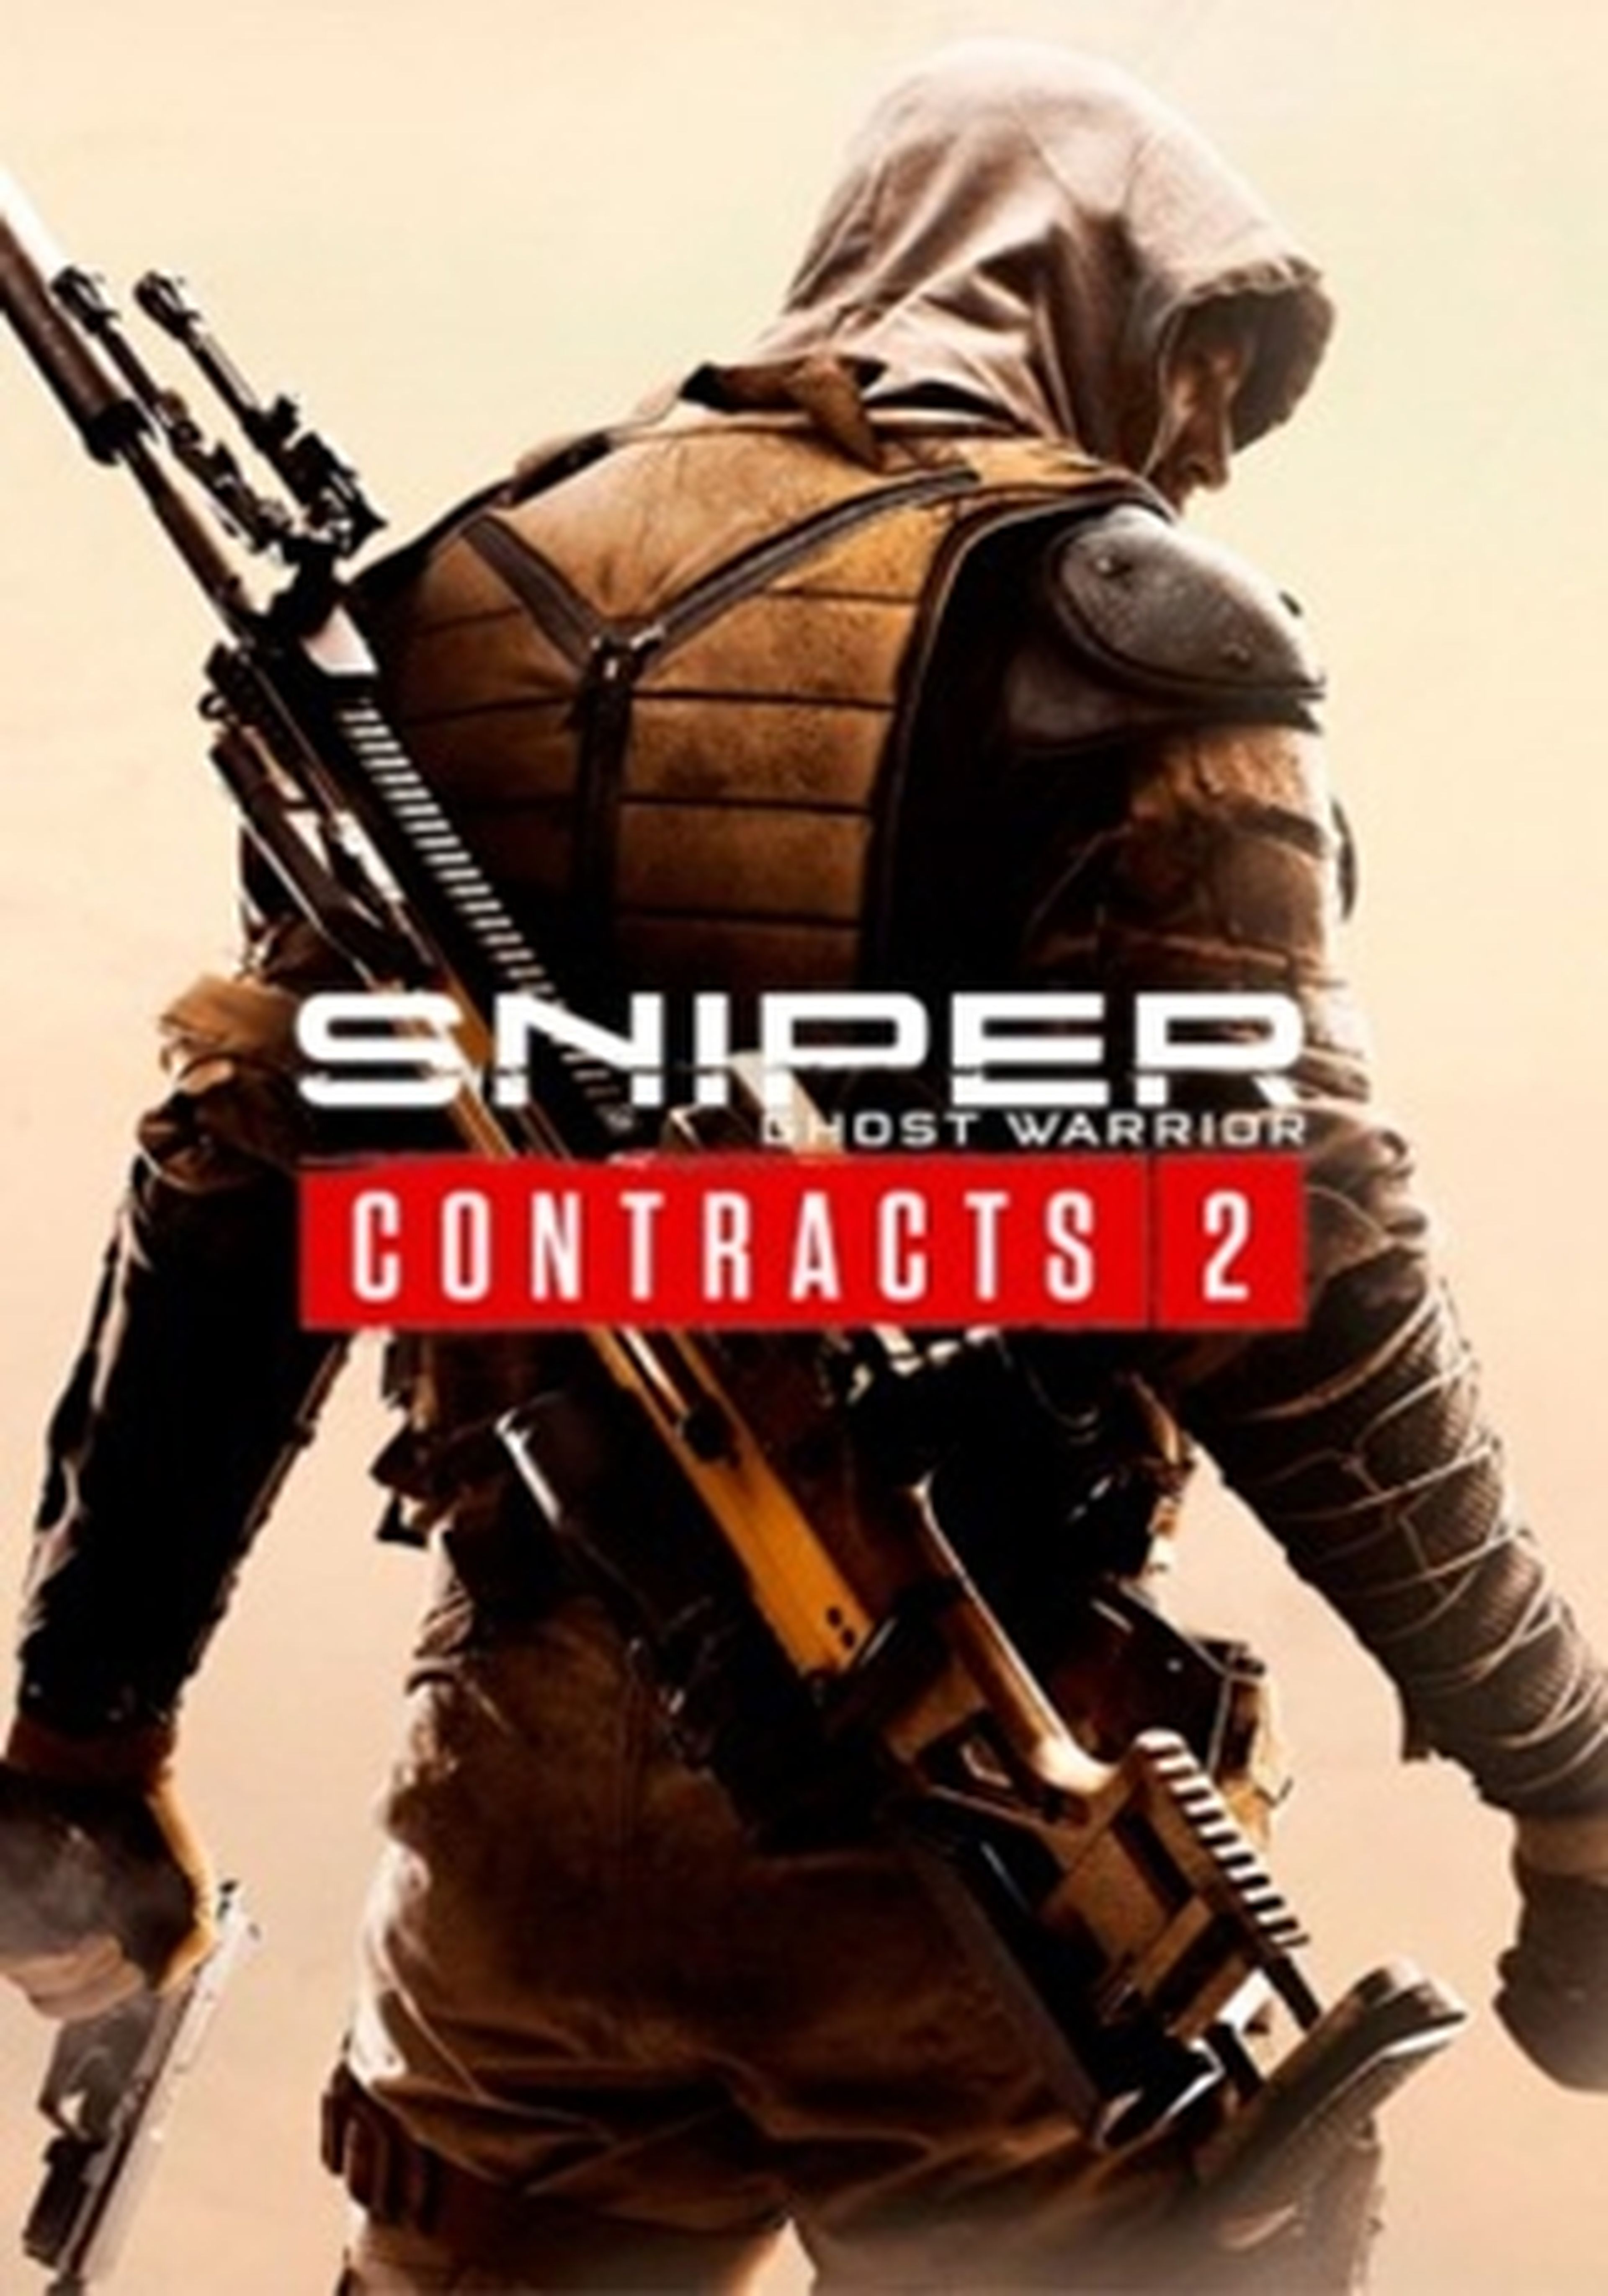 Sniper Ghost Warriors Contracts 2 cartel